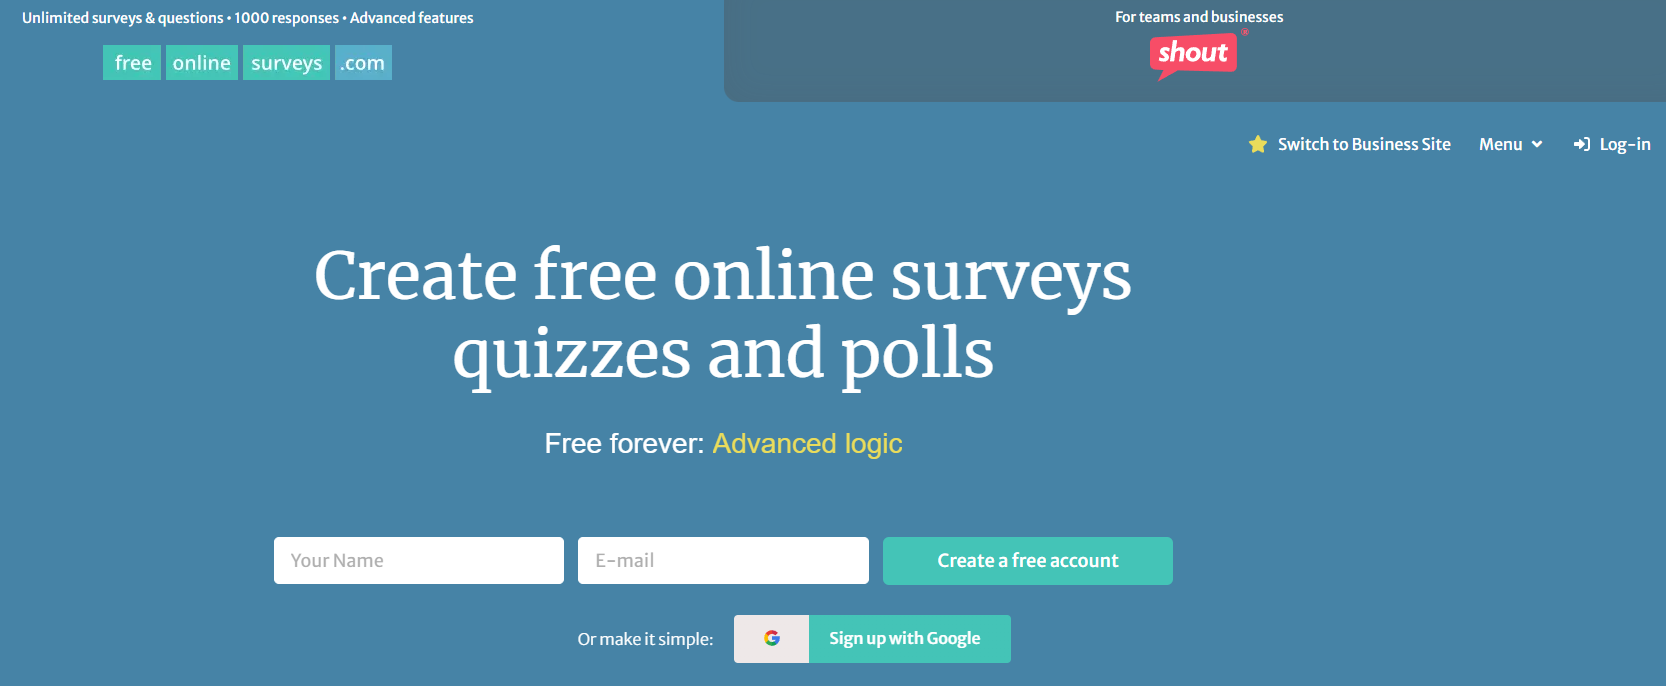 freeonlinesurveys top survey tool